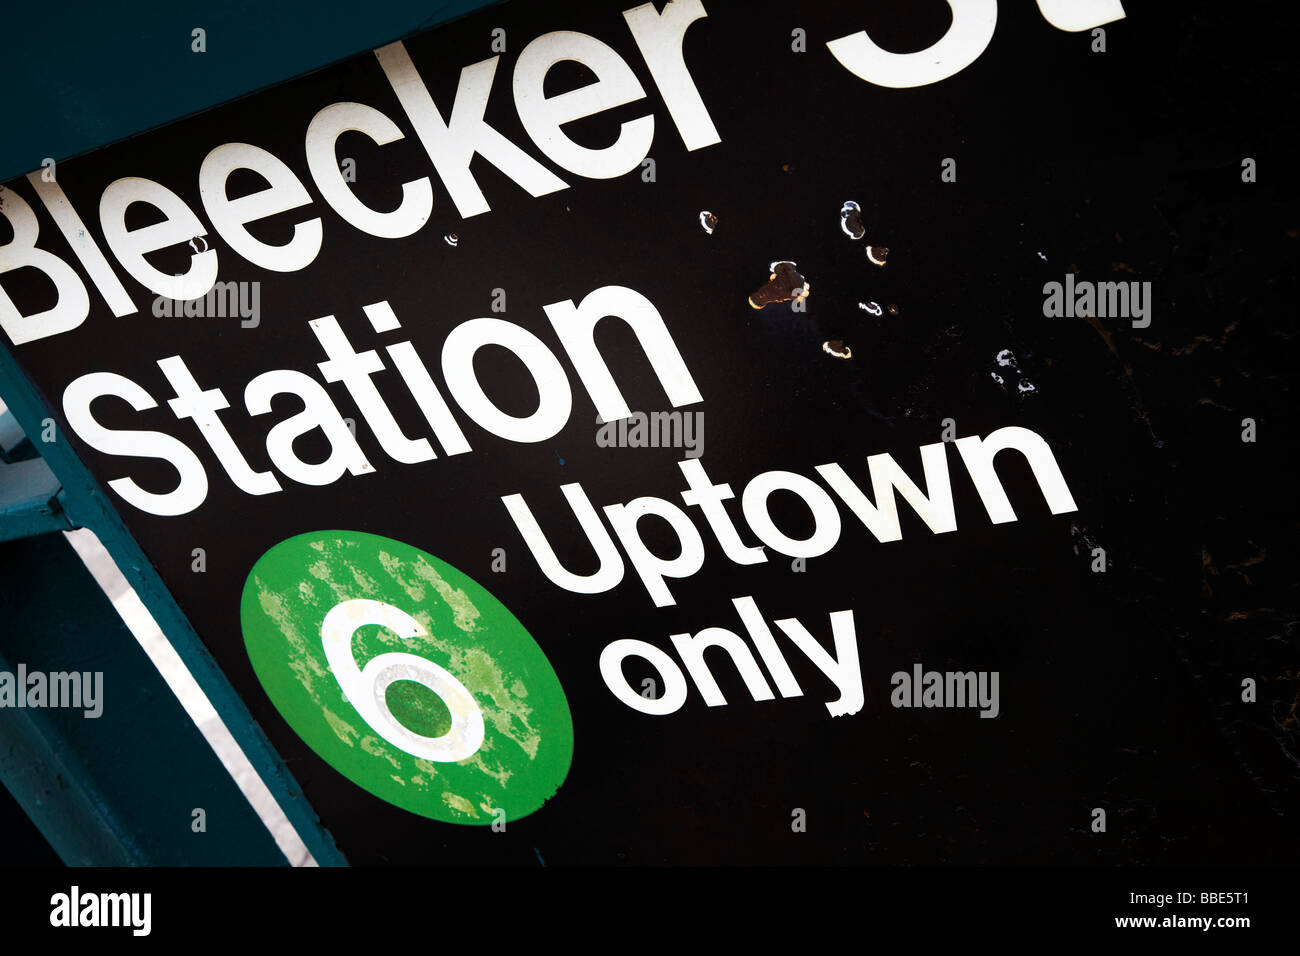 Bleeker st Station, New York subway Stock Photo